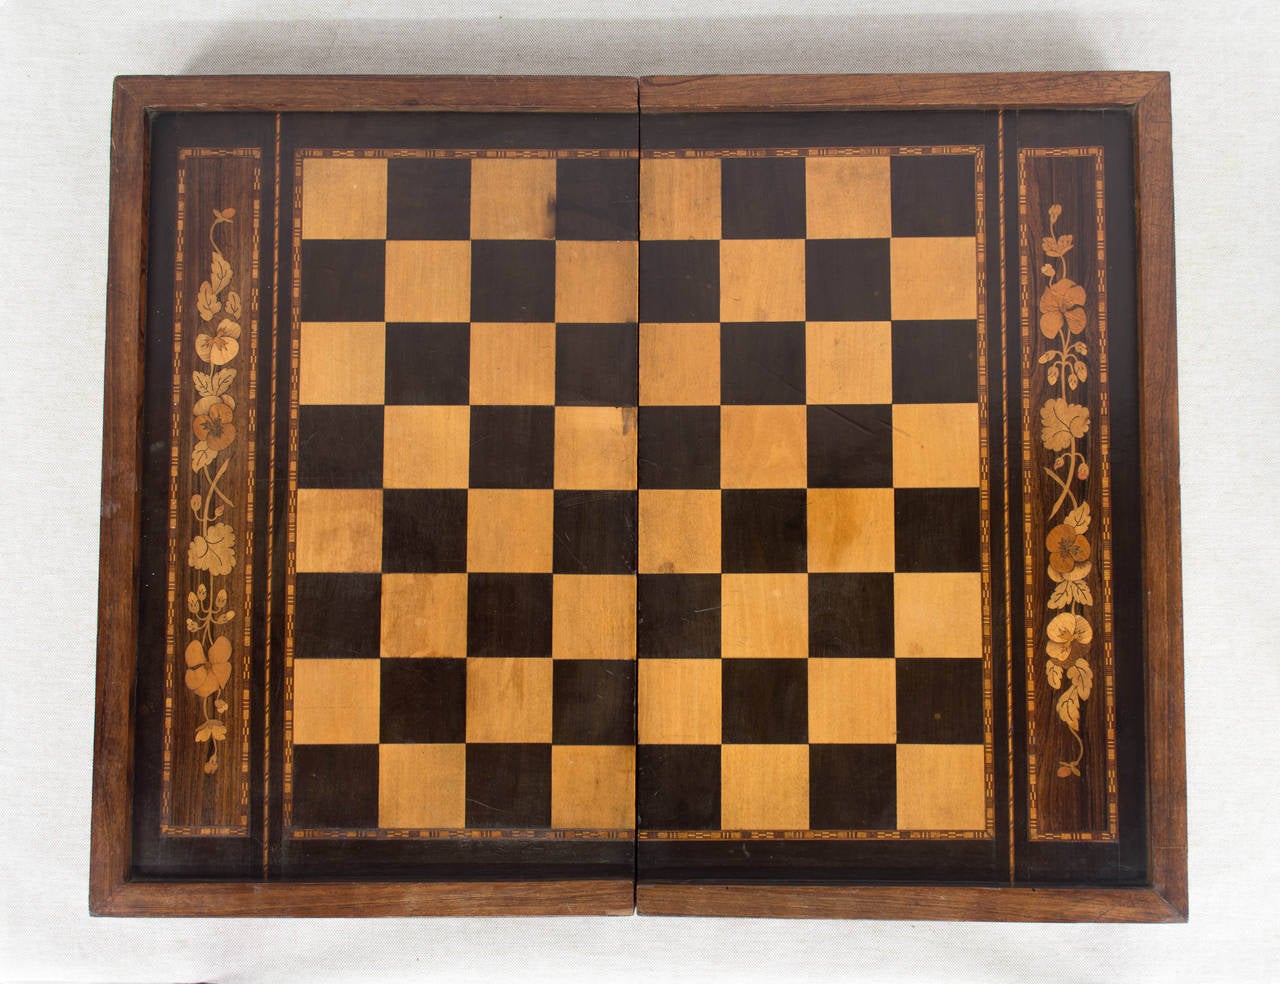 19th century chess set